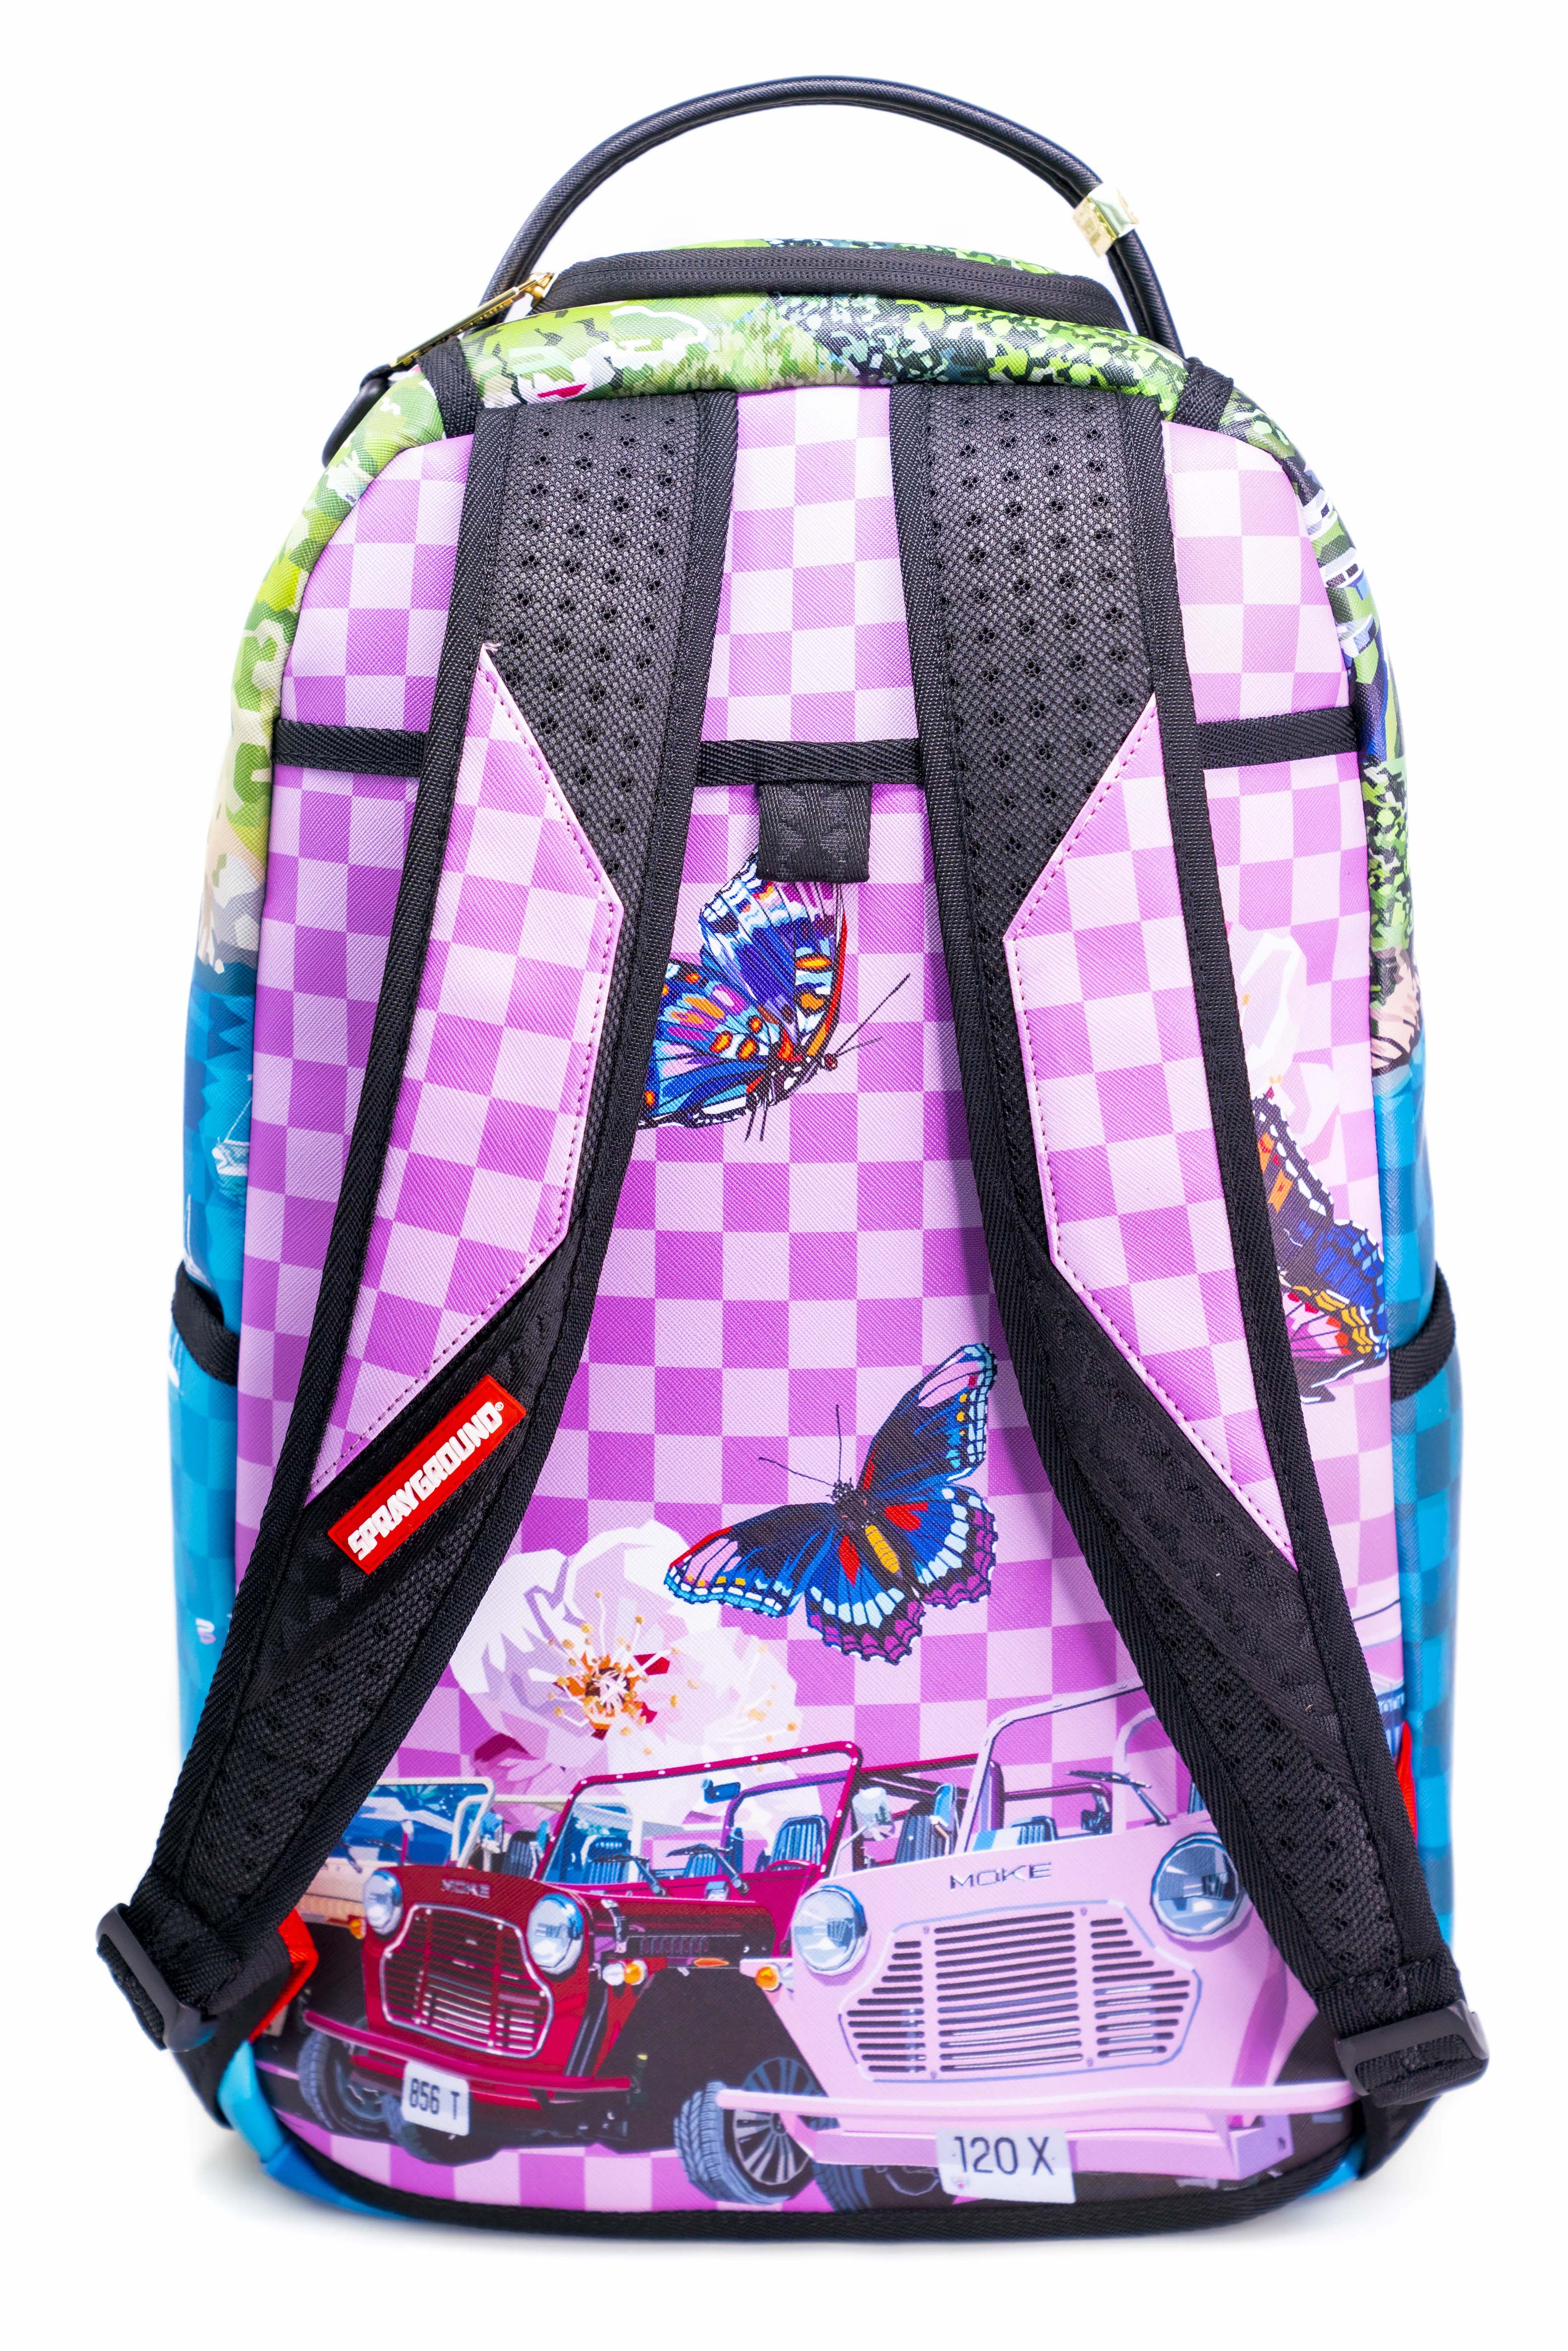 Shop Sprayground Backpacks by ke.go